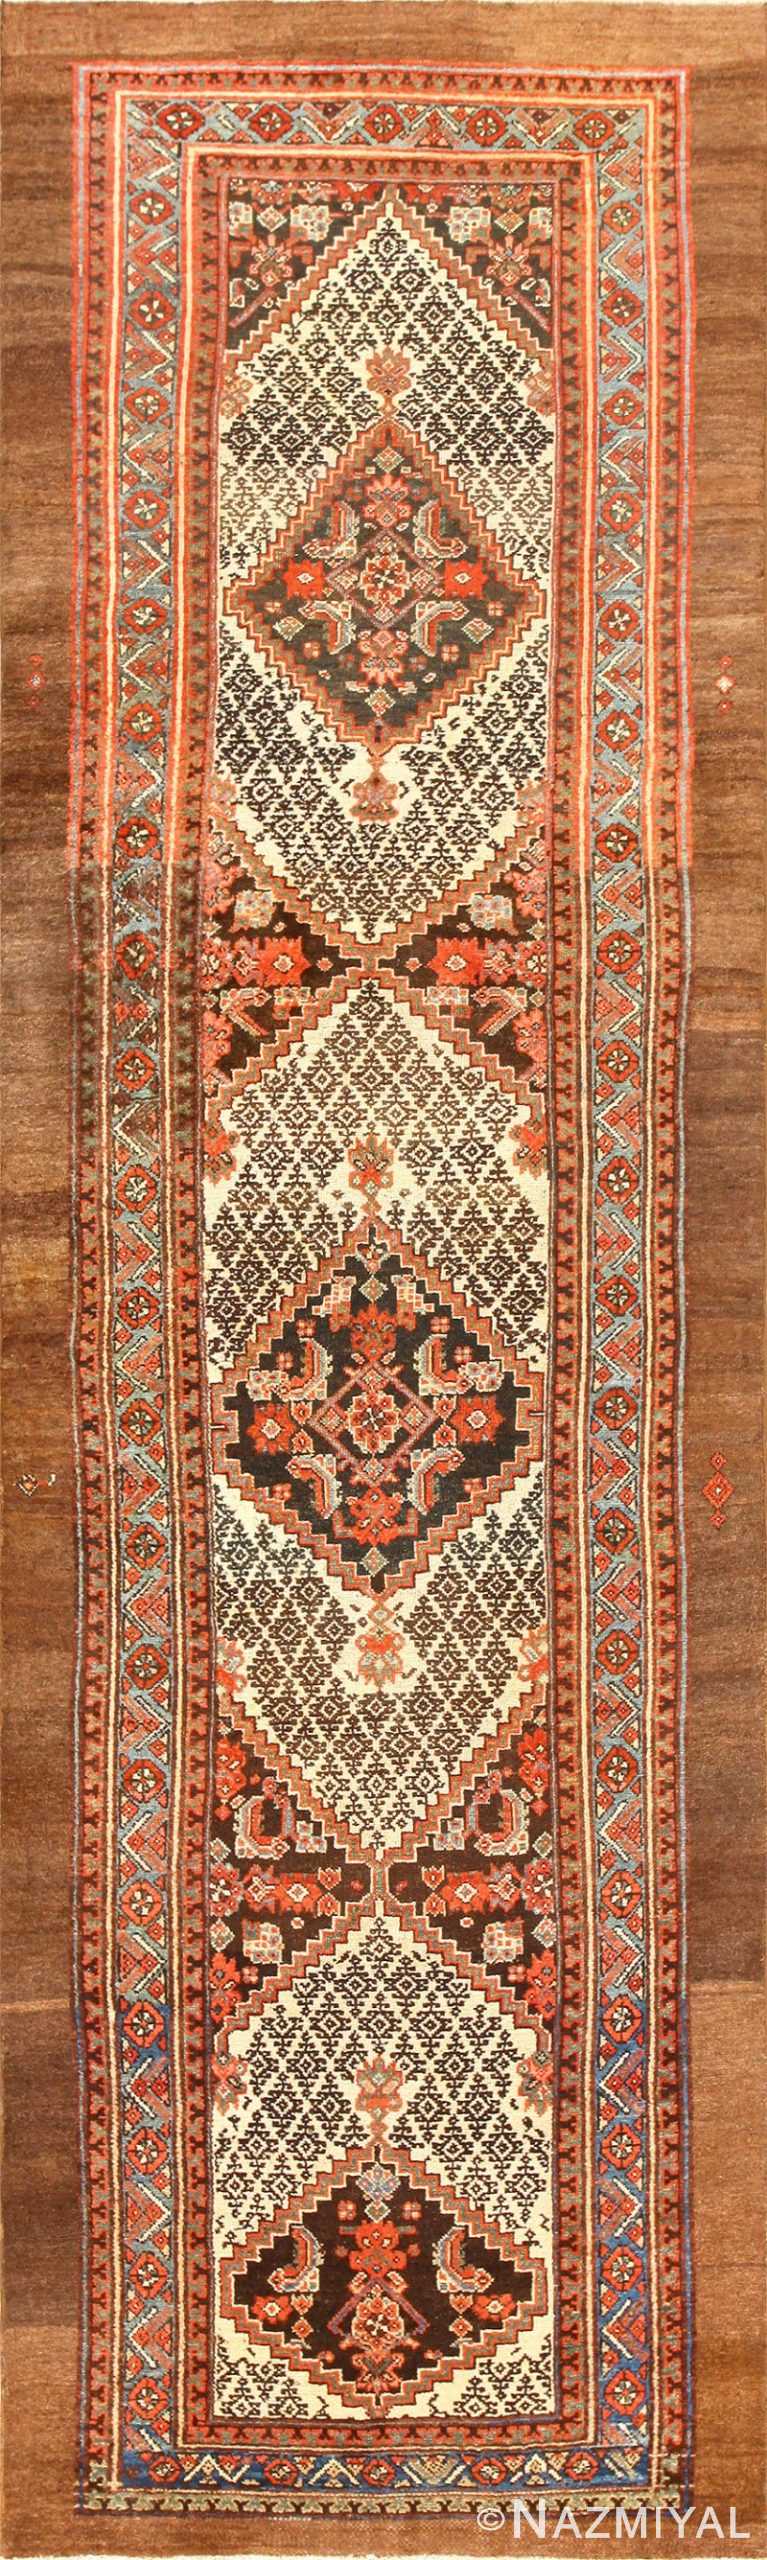 Tribal Antique Persian Serab Runner Rug 50578 Detail/Large View